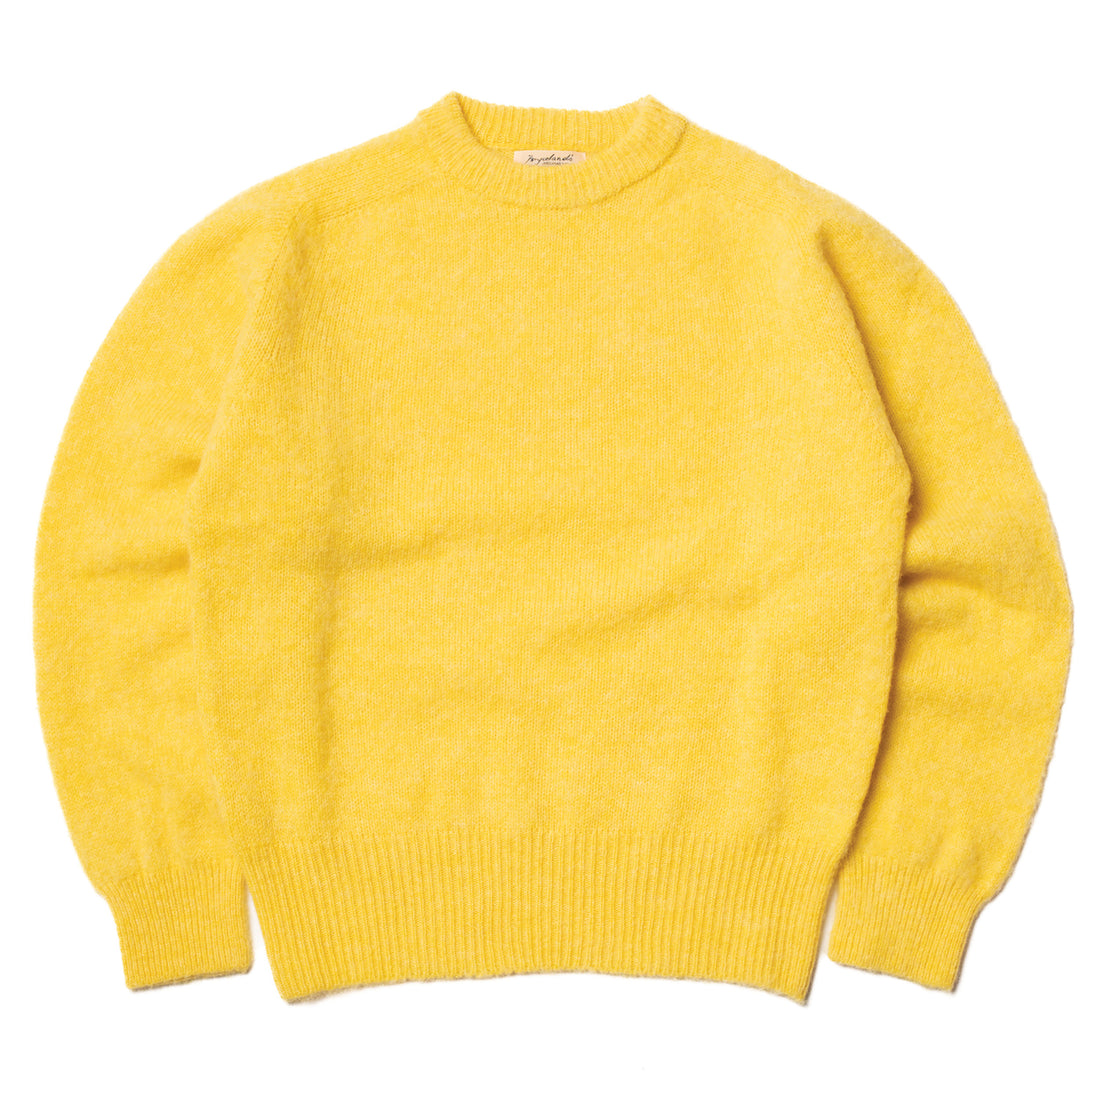 Bryceland's Shaggy Shetland Sweater Zest